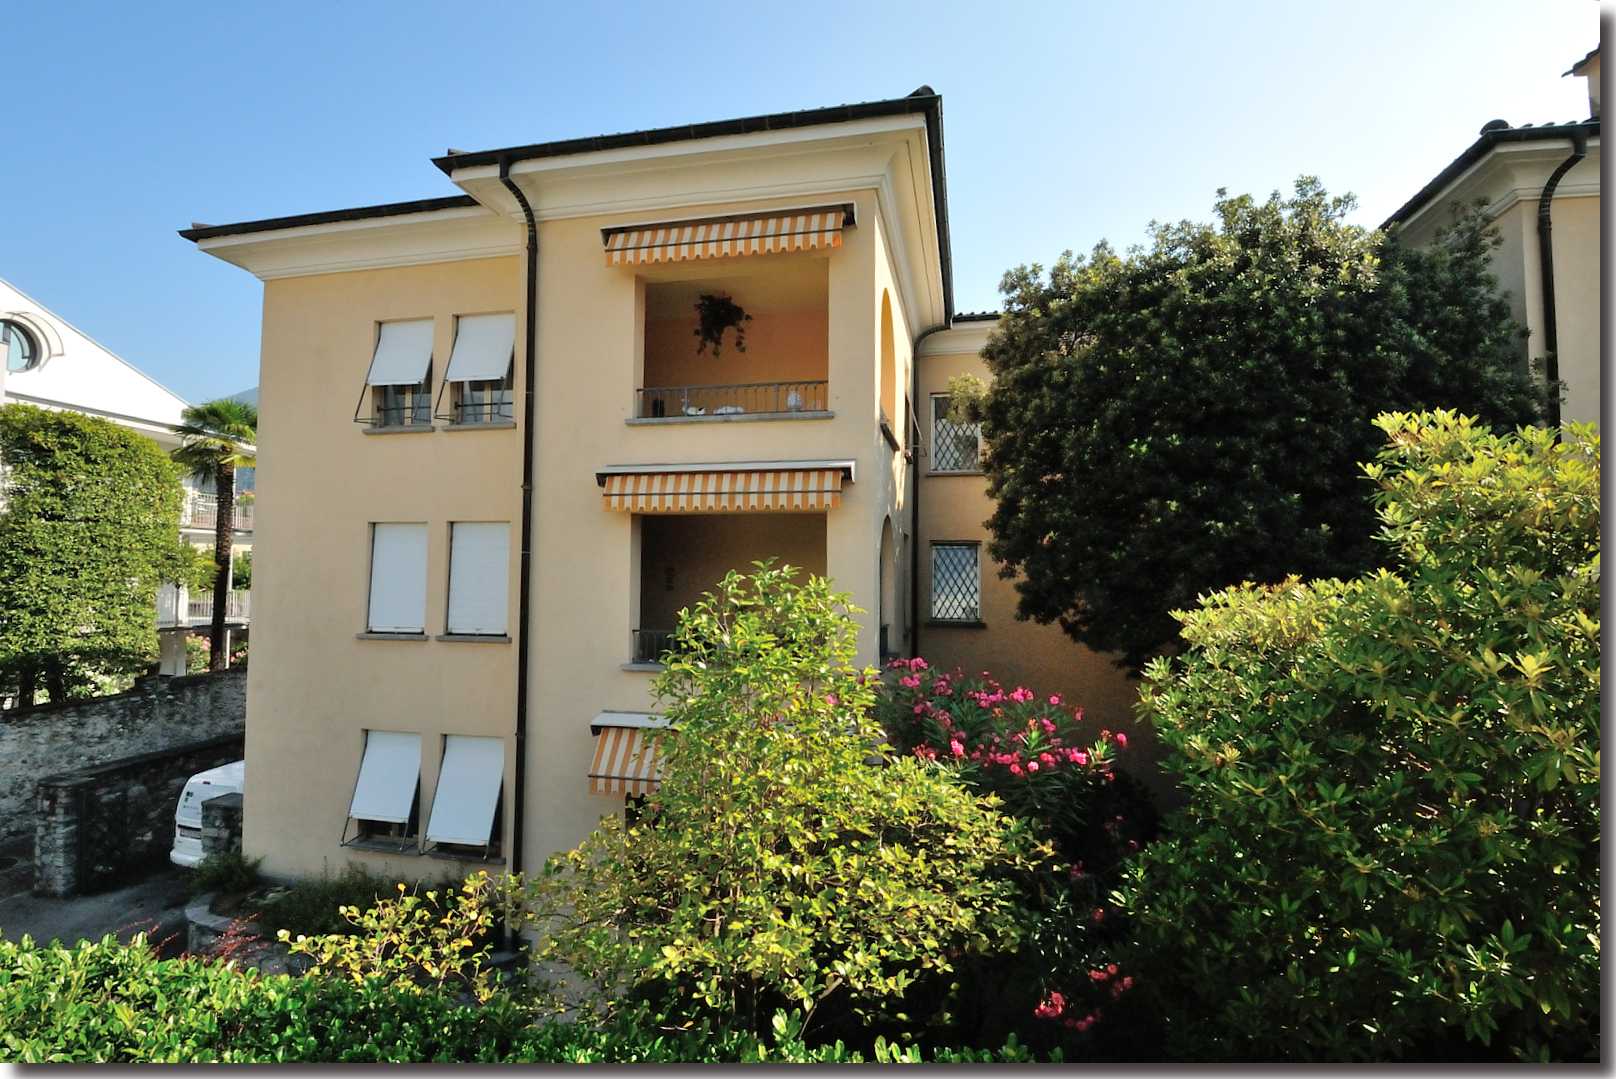 Casa Gemelli - via Orelli 16 - Ascona [ Aussenansicht ]